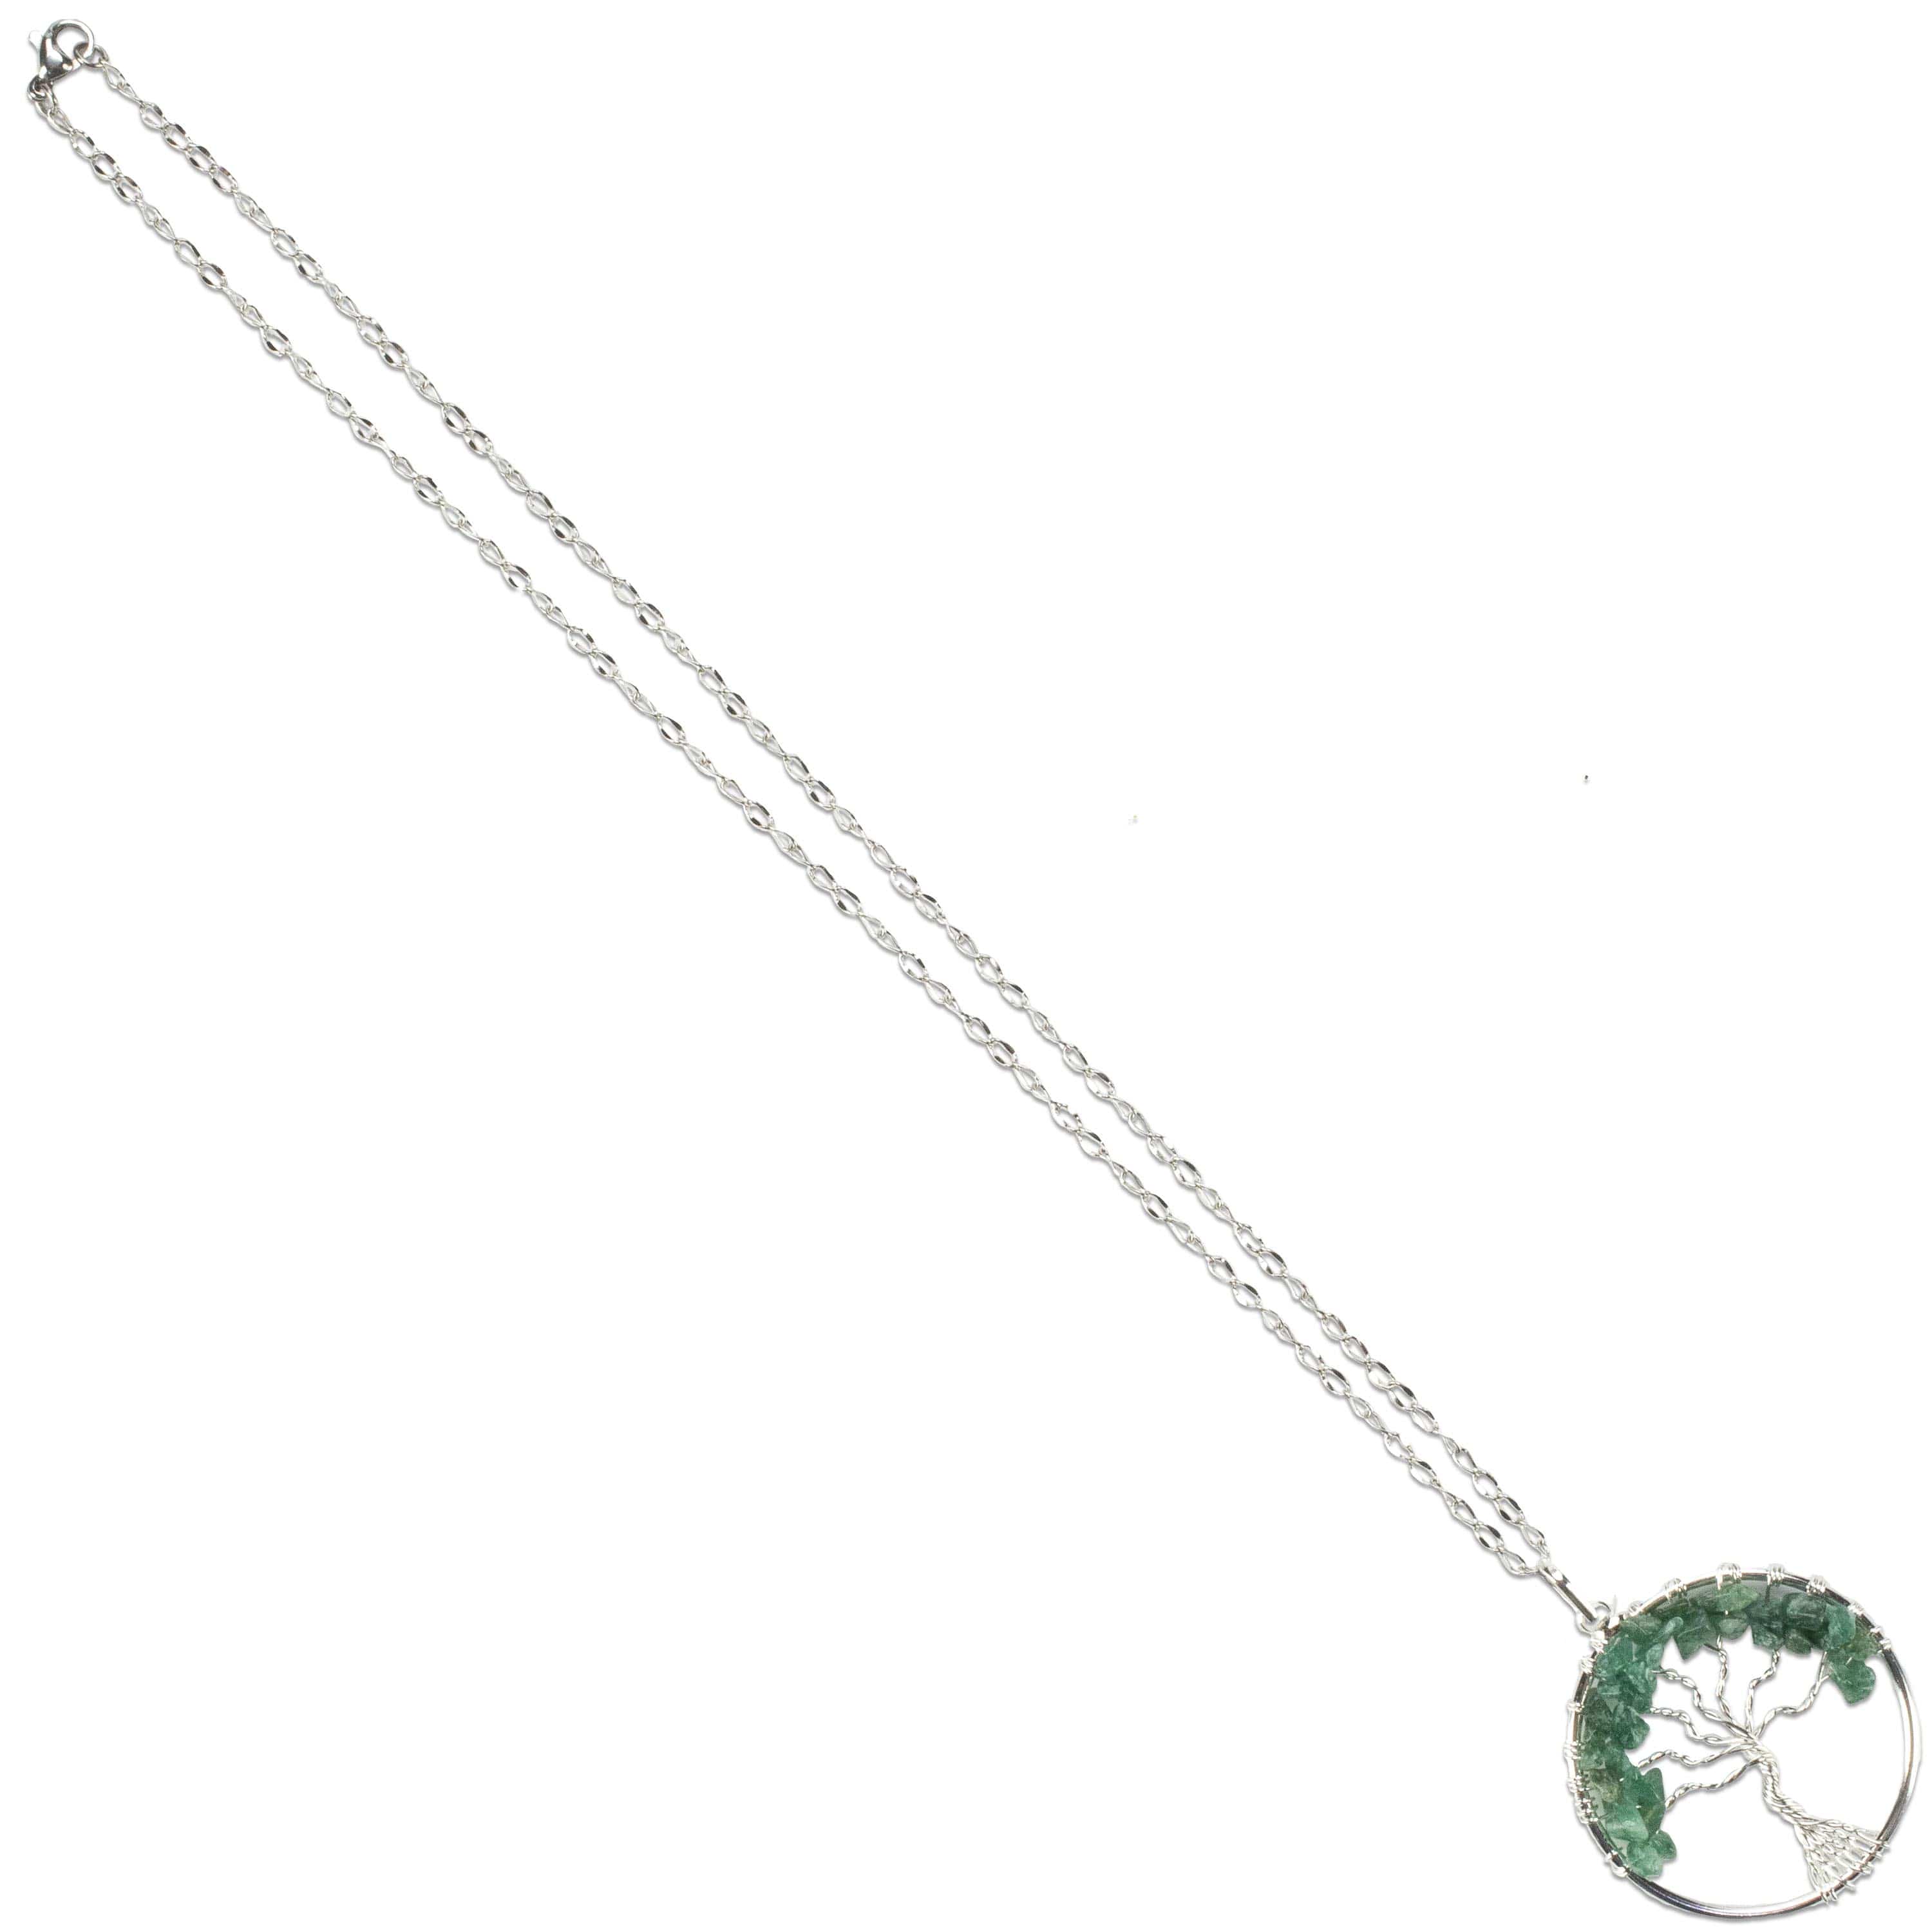 Chakra Gemstone Tree of Life Necklace: Balance & Beauty - KALIFANO